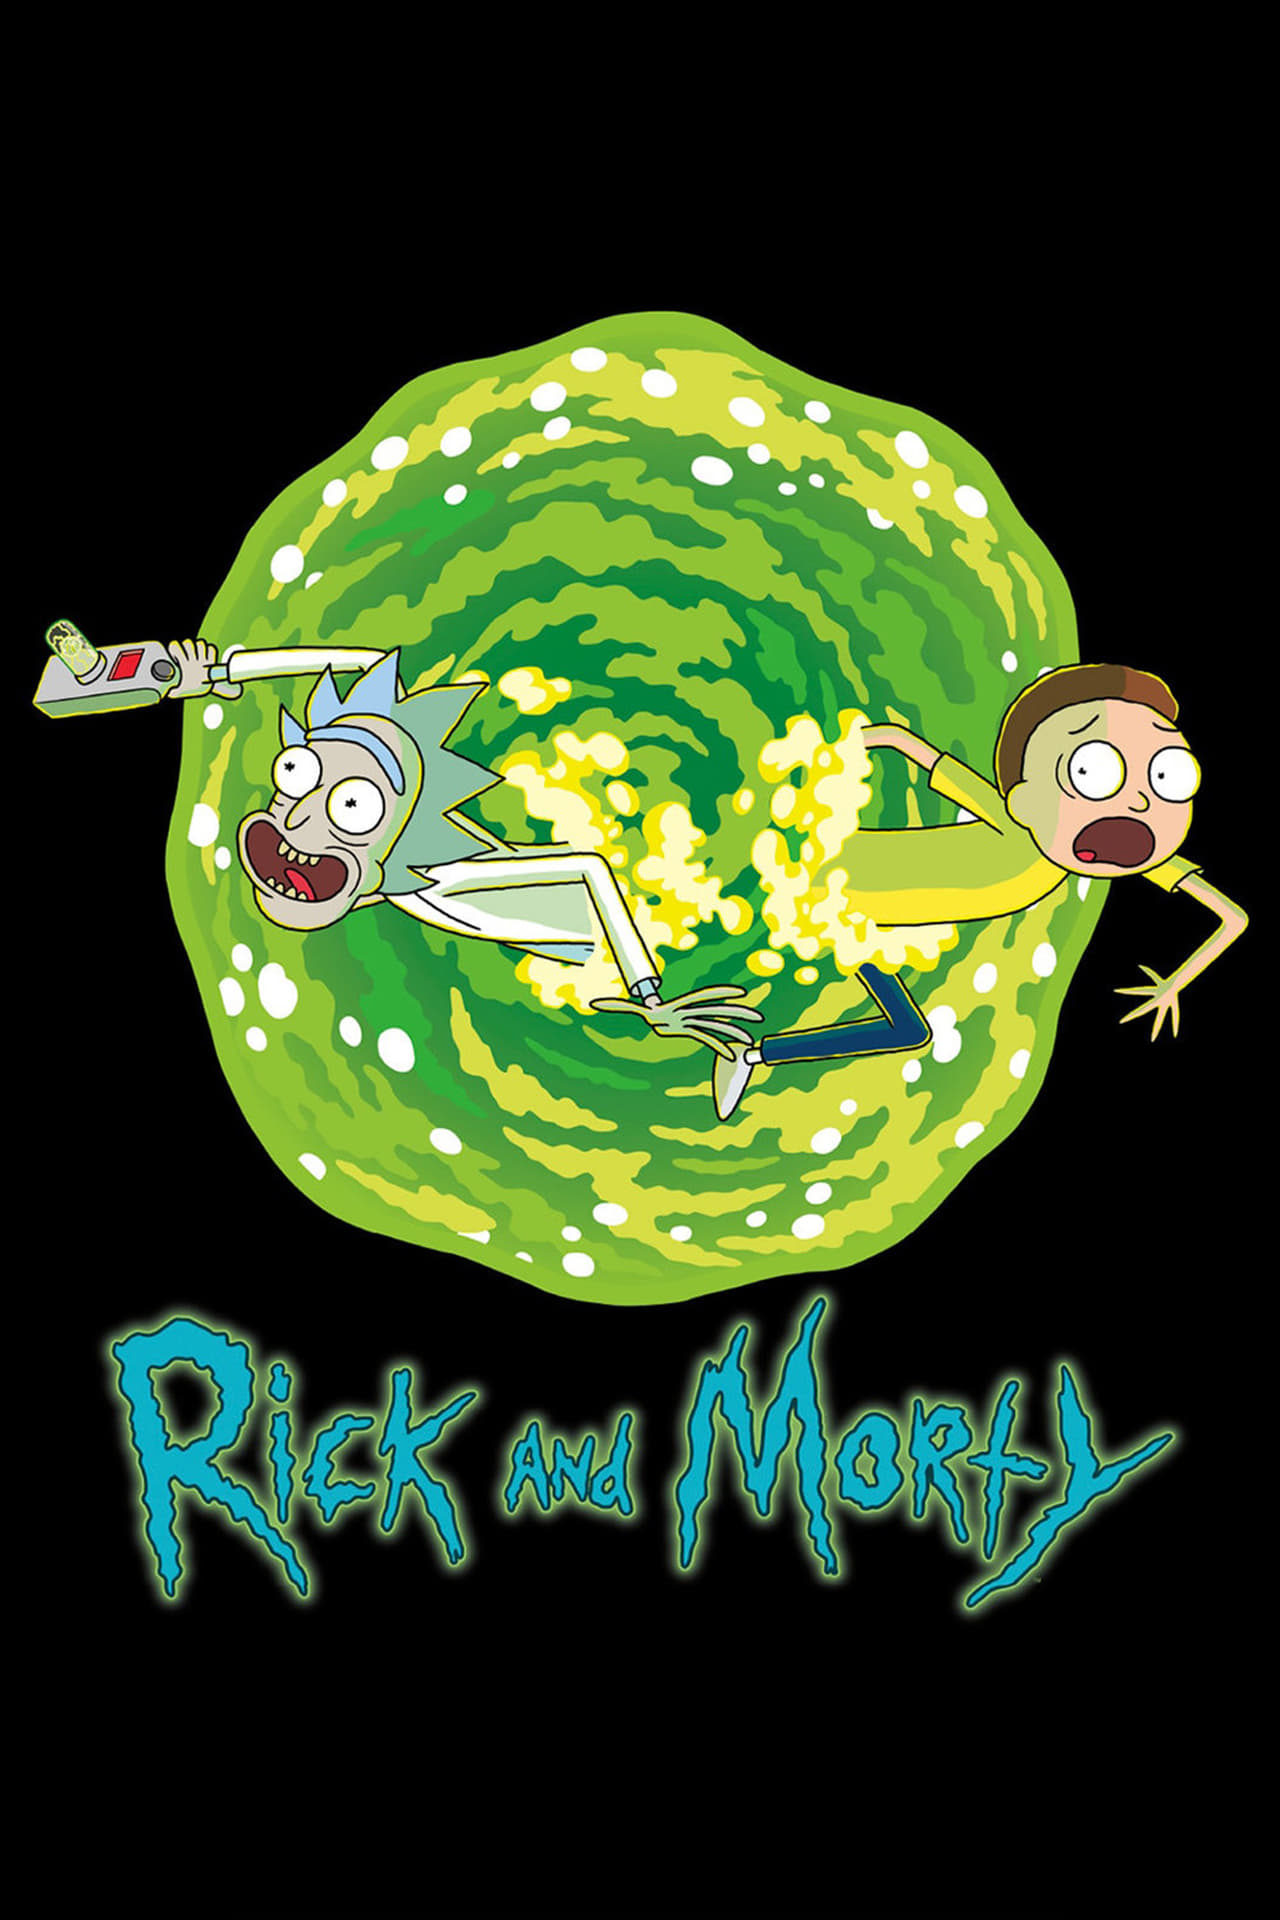 rick and morty season 1 full season direct download free